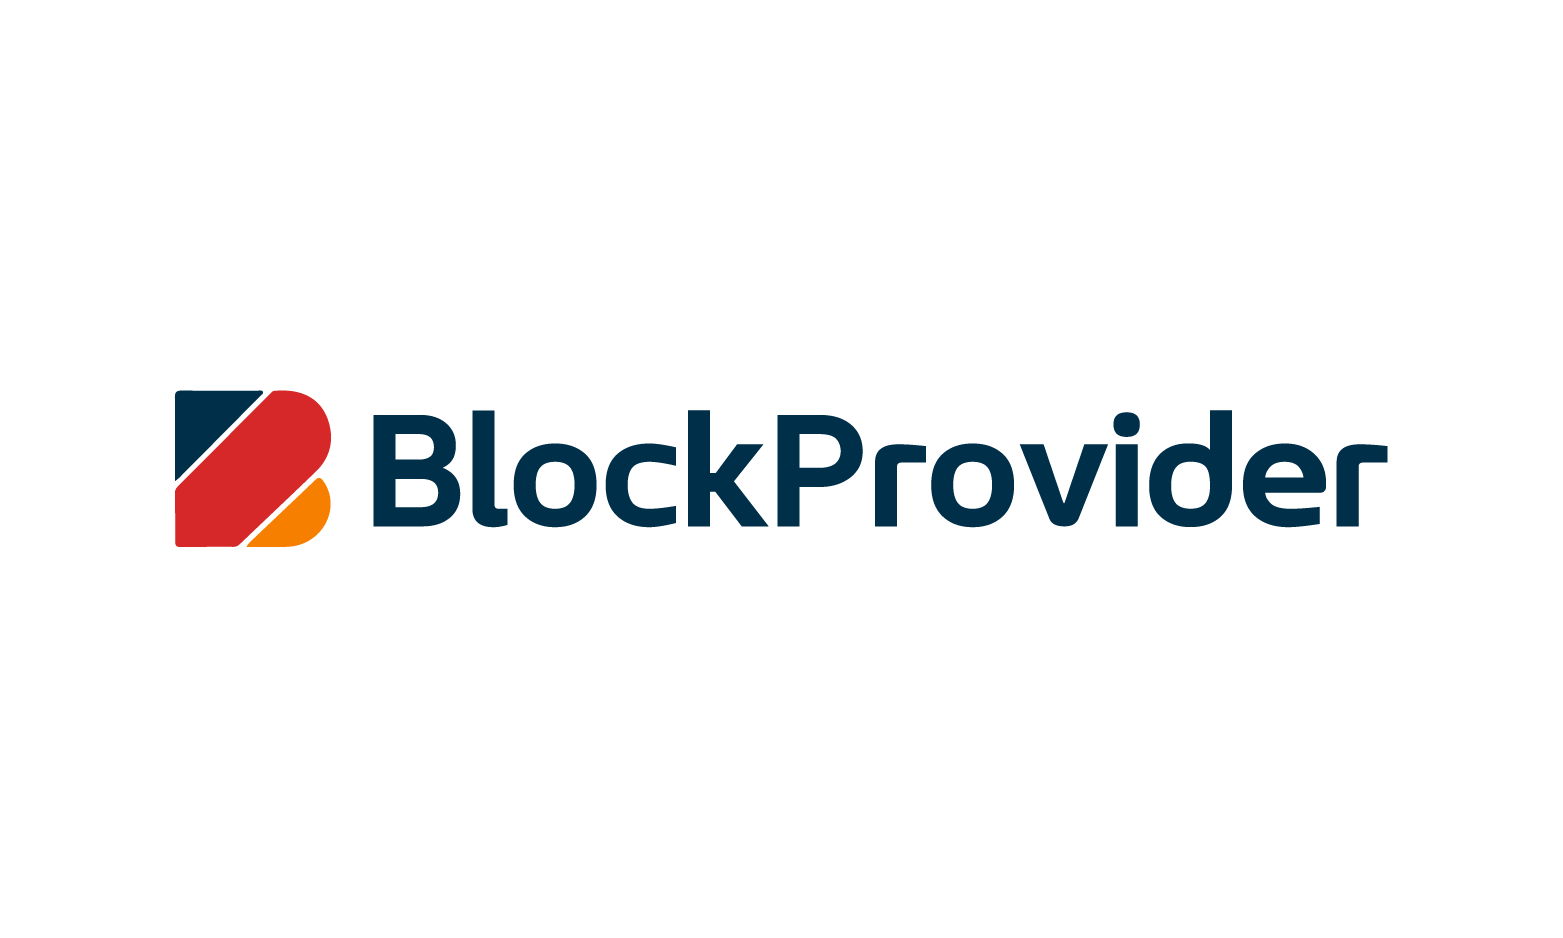 BlockProvider.com - Creative brandable domain for sale